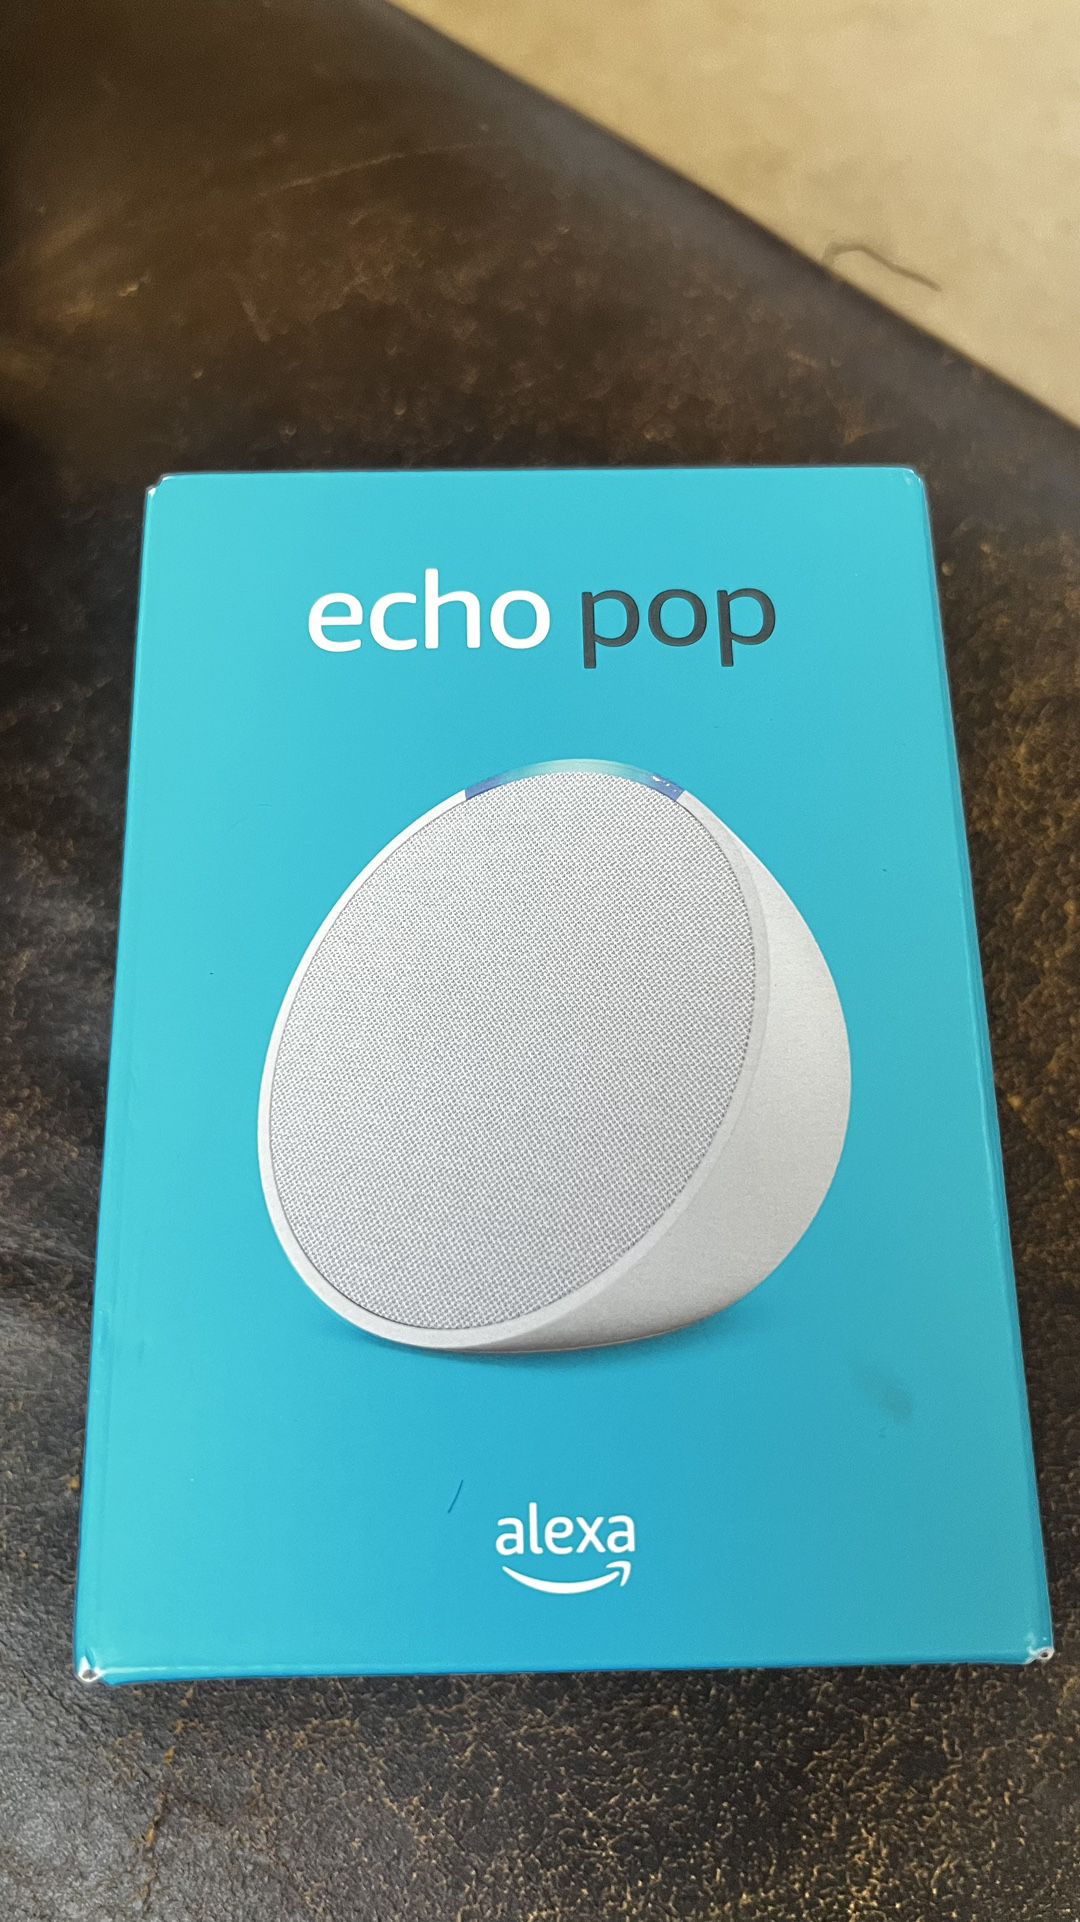 Echo Pop Amazon Smart Speaker With Alexa, New In Box